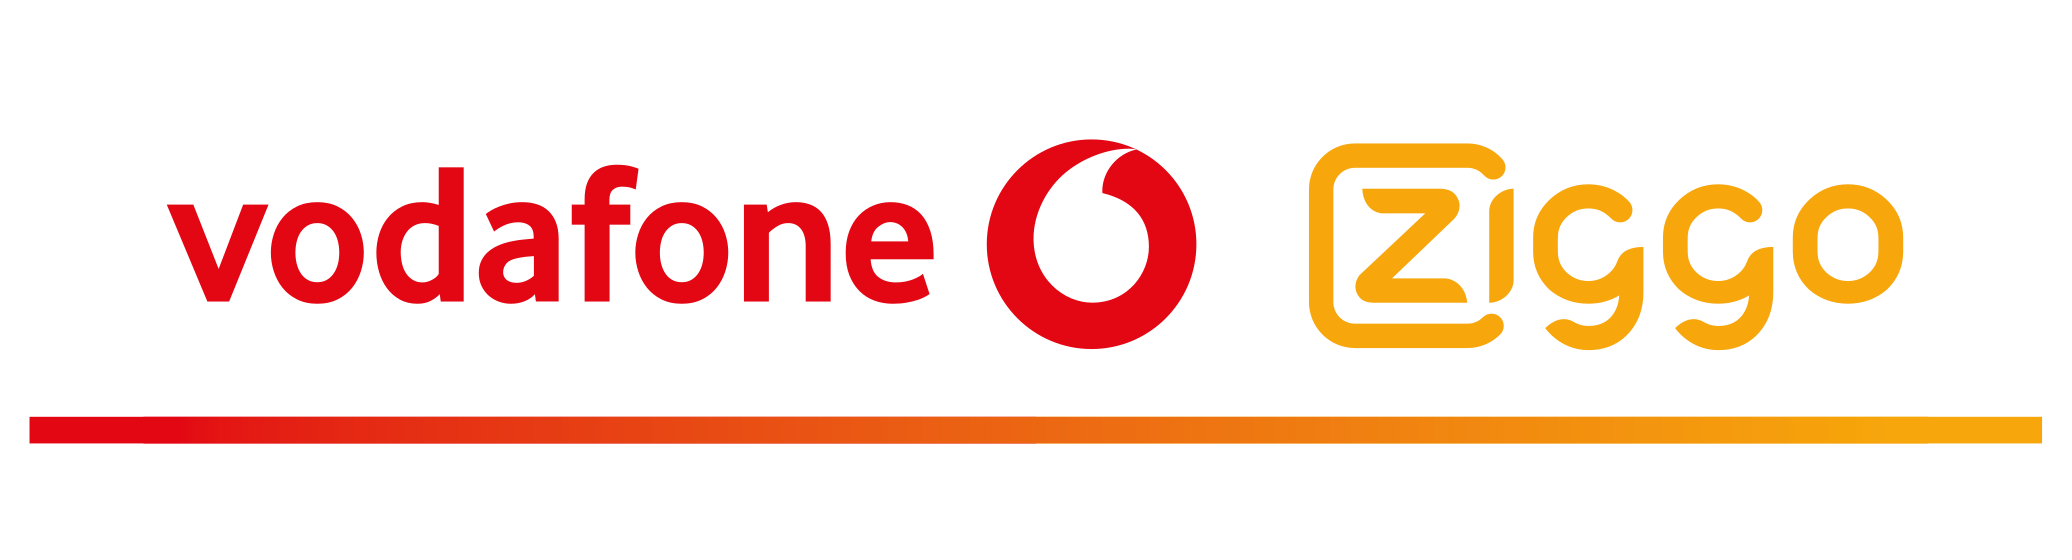 vodafone-ziggo-logo